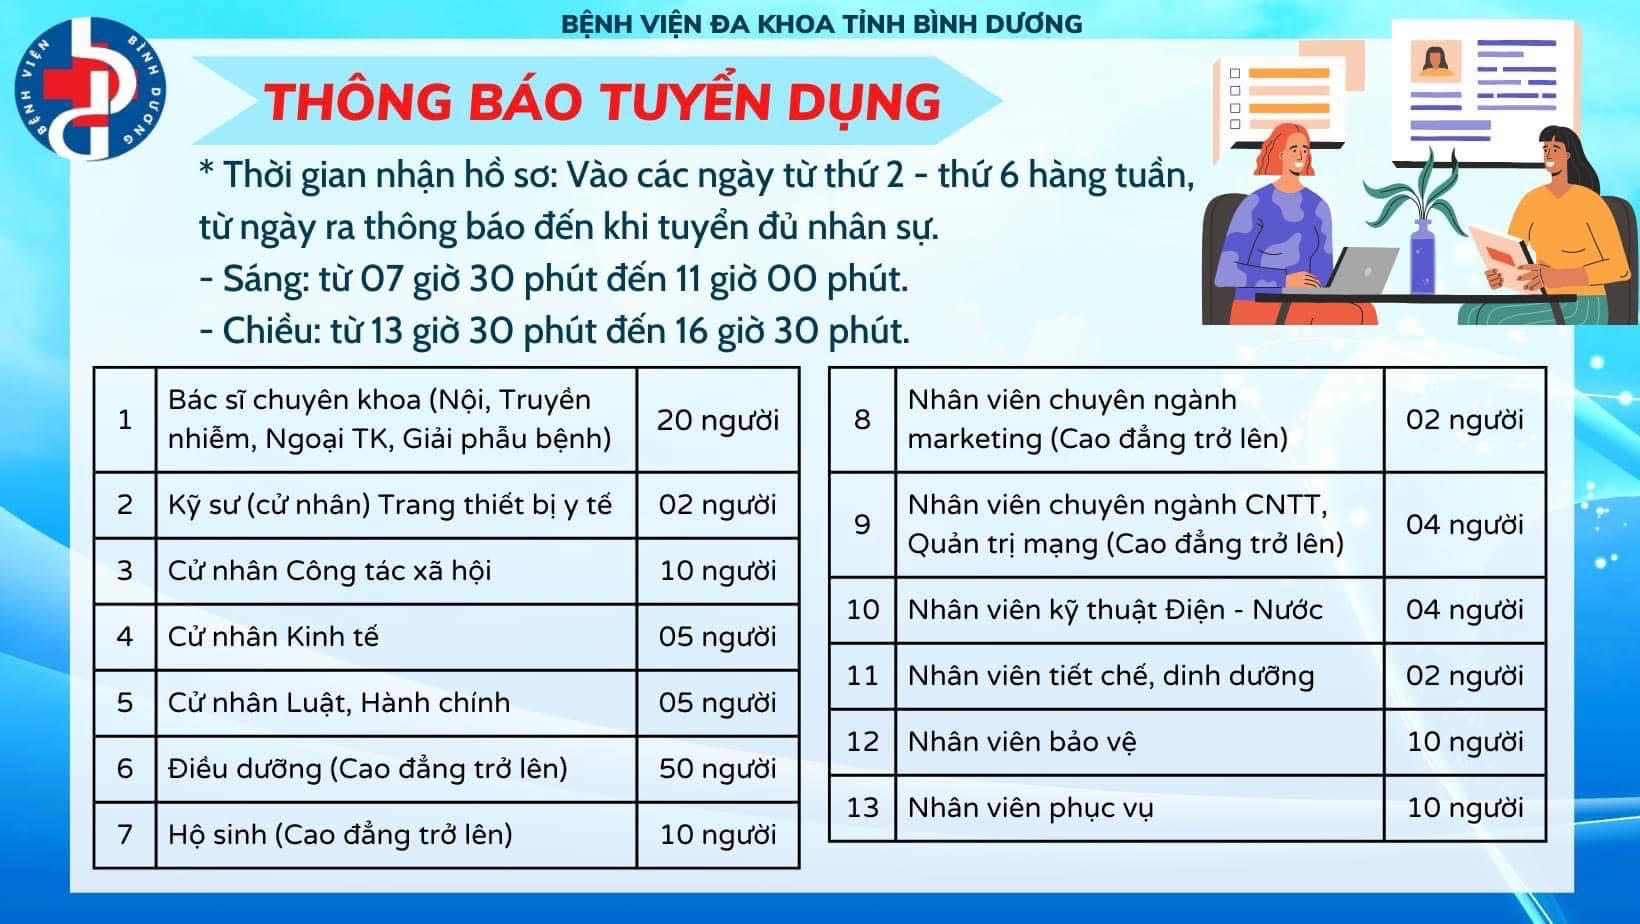 TuyendungBV_Binhduong